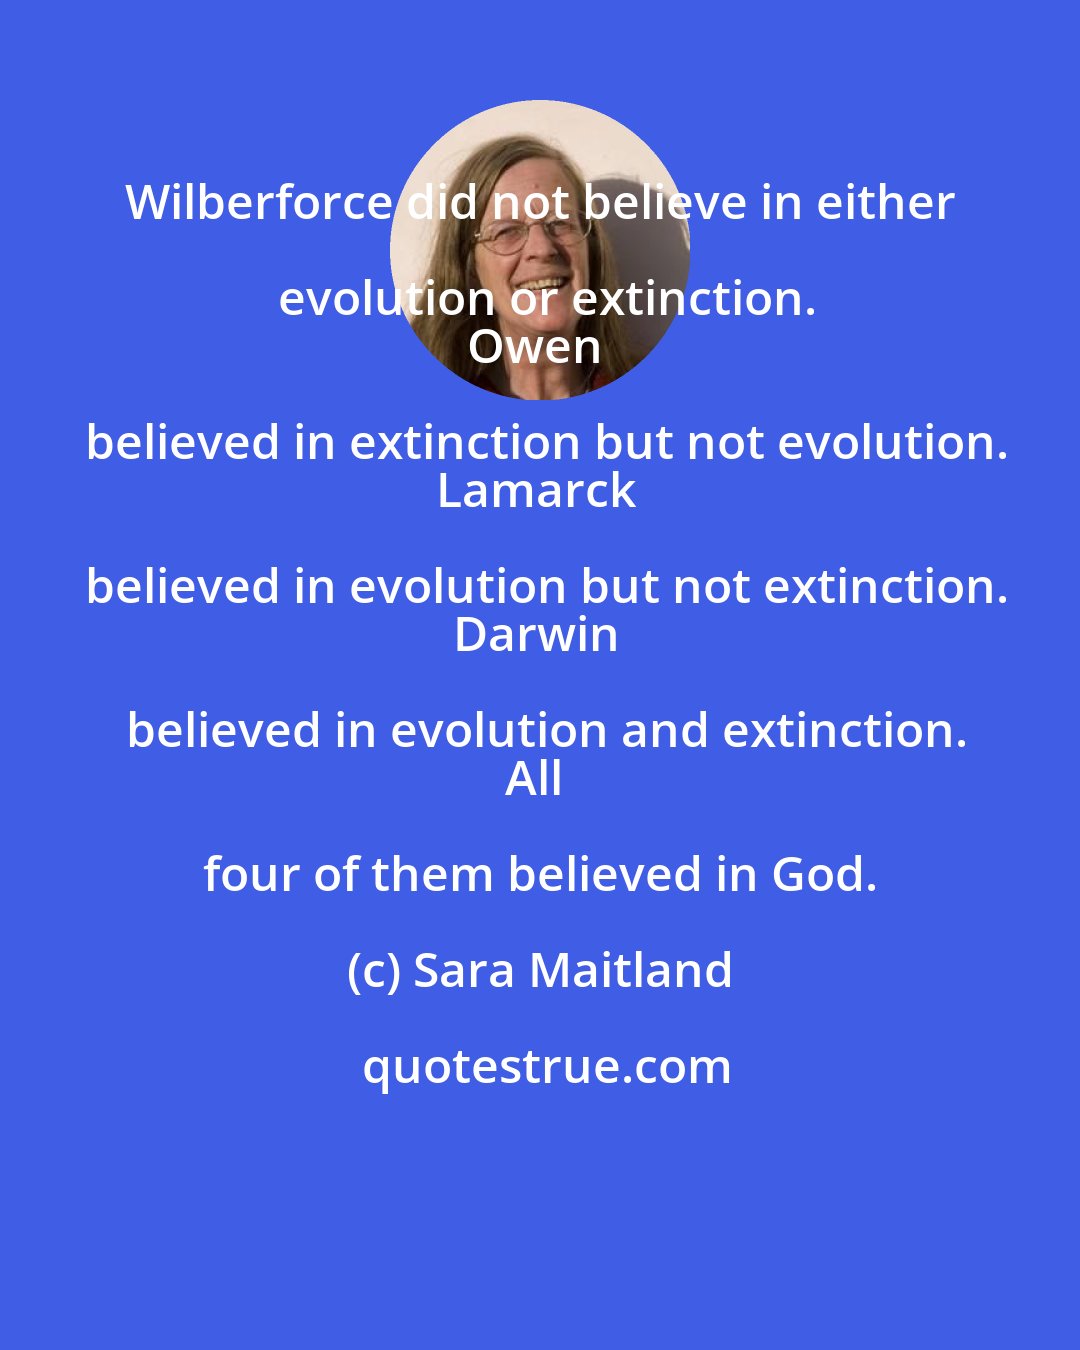 Sara Maitland: Wilberforce did not believe in either evolution or extinction.
Owen believed in extinction but not evolution.
Lamarck believed in evolution but not extinction.
Darwin believed in evolution and extinction.
All four of them believed in God.